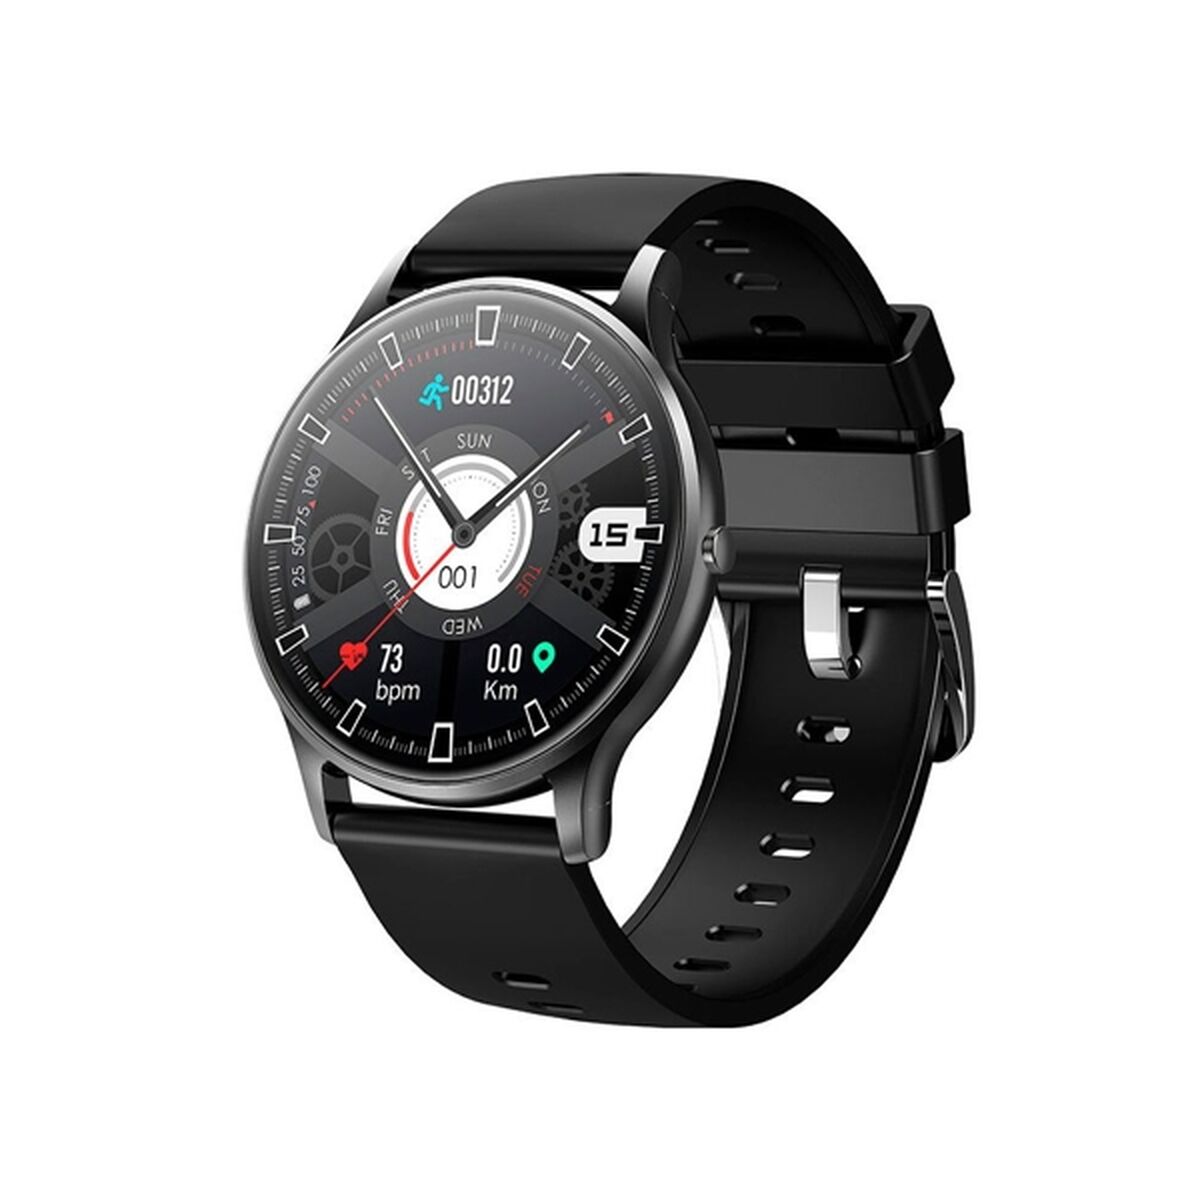 Kaufe Smartwatch Radiant RAS21001 bei AWK Flagship um € 106.00